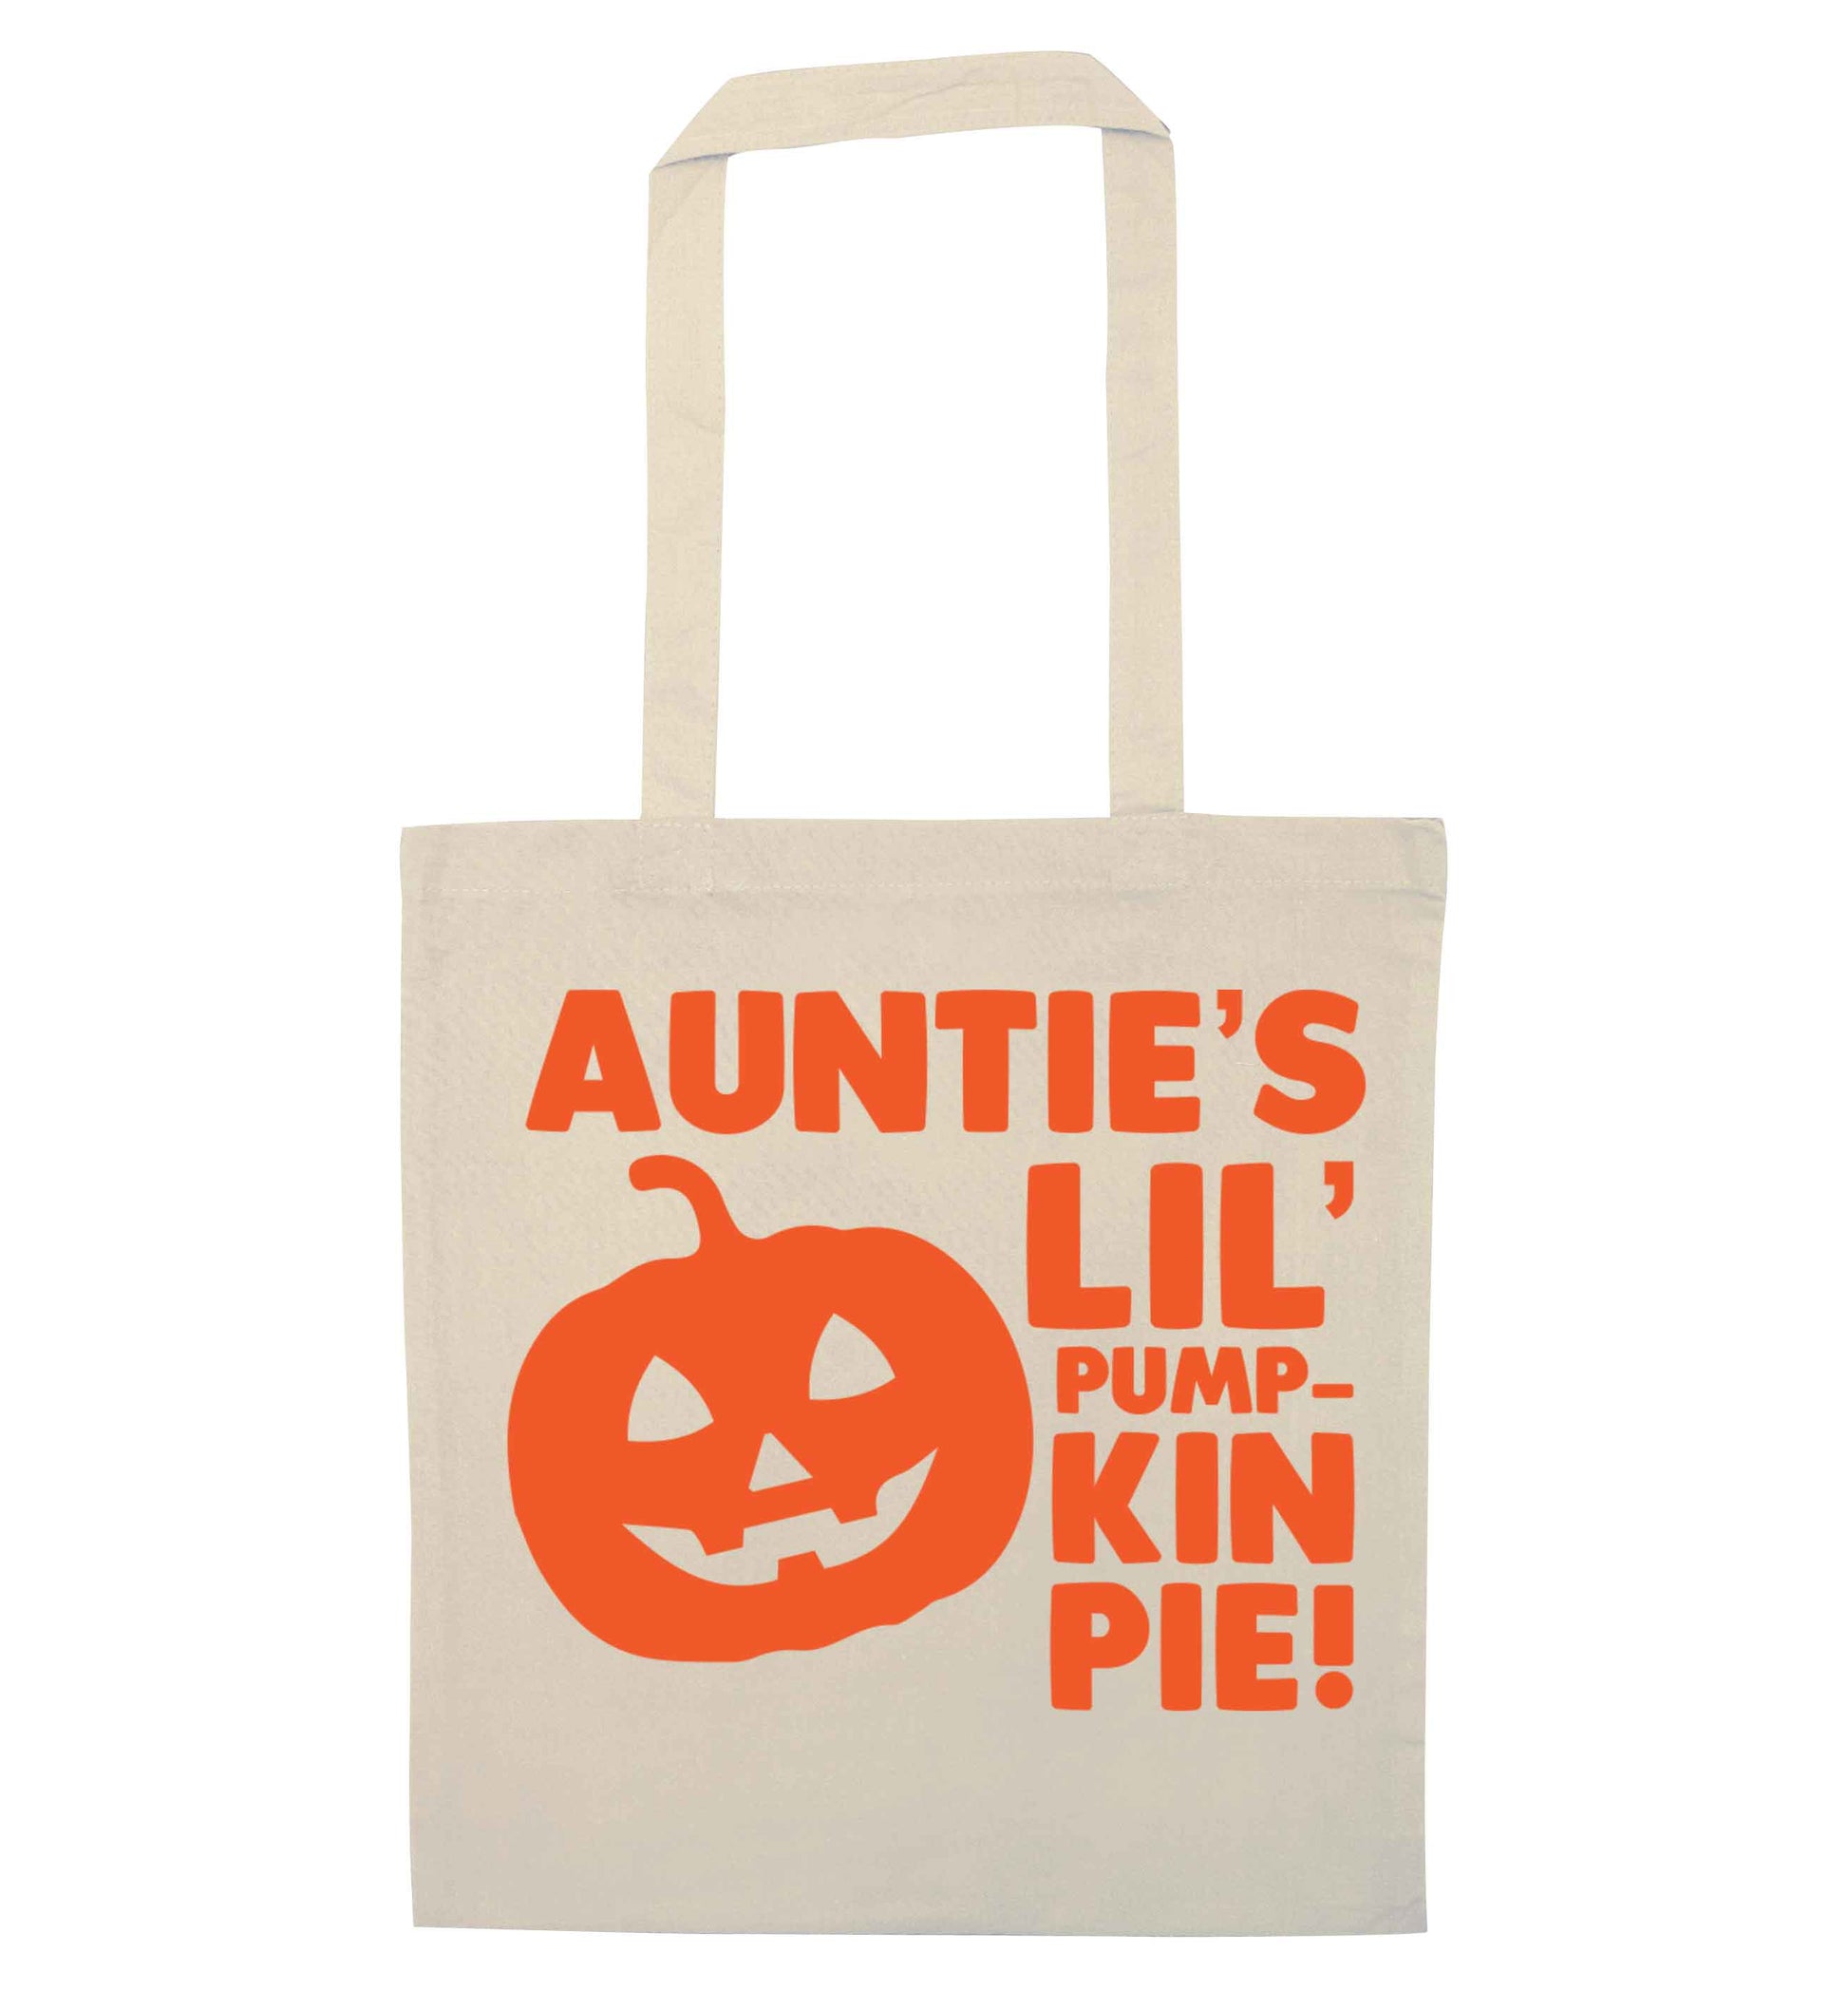 Auntie's lil' pumpkin pie natural tote bag